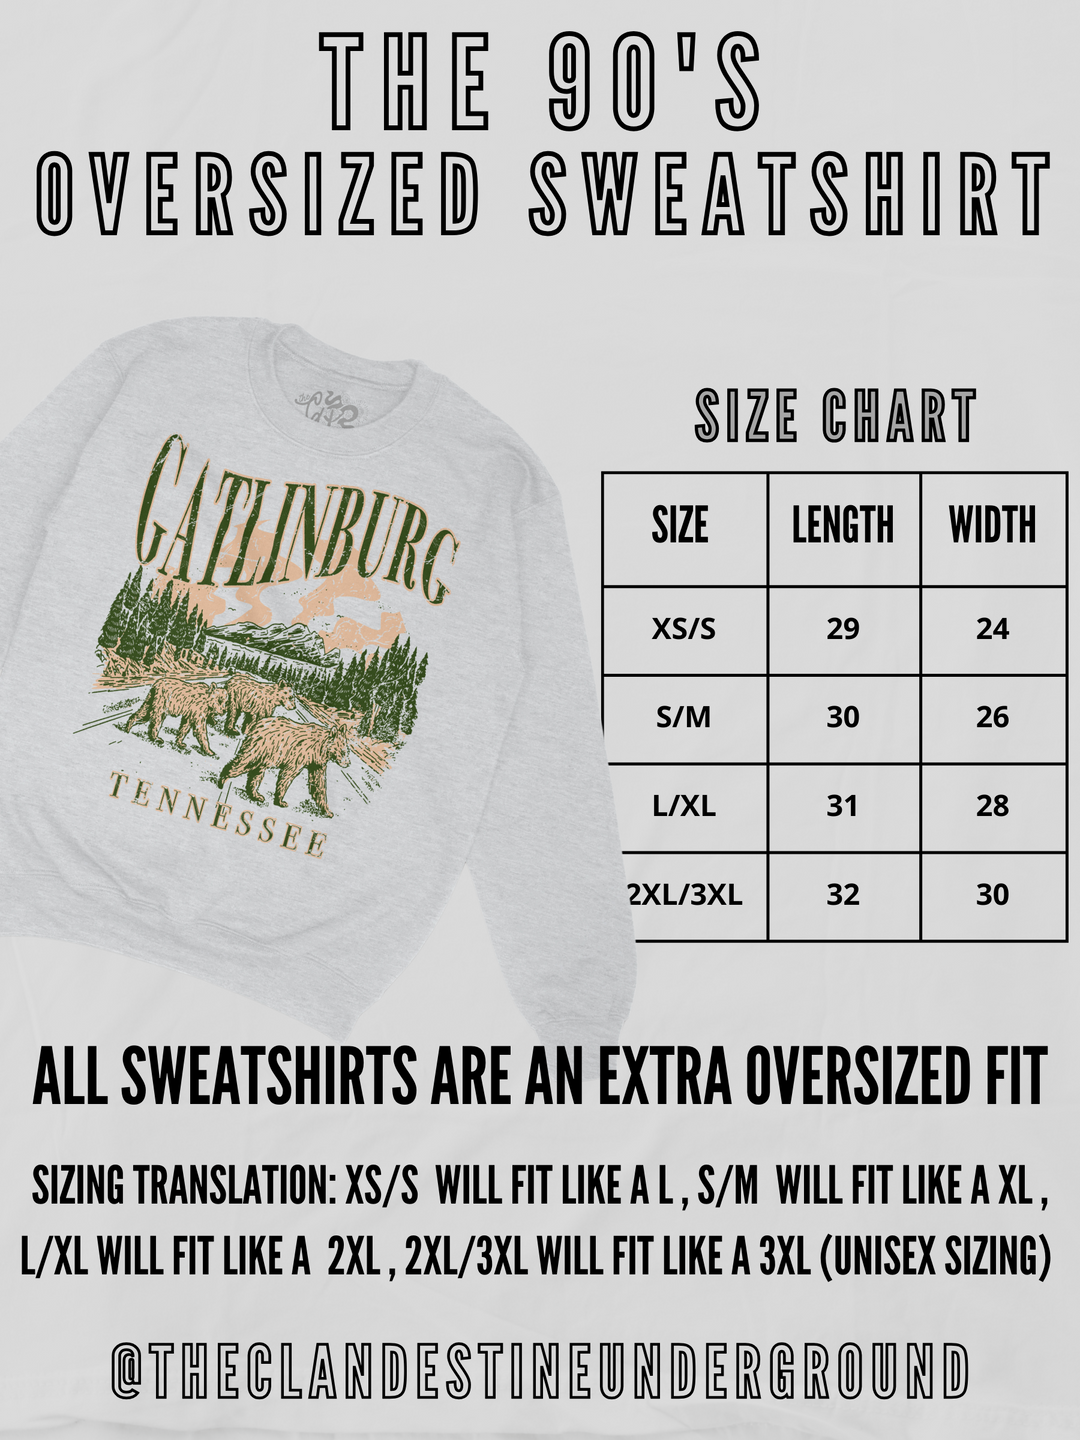 Underground Original Design: San Antonio Basketball Oversized 90s Sweatshirt